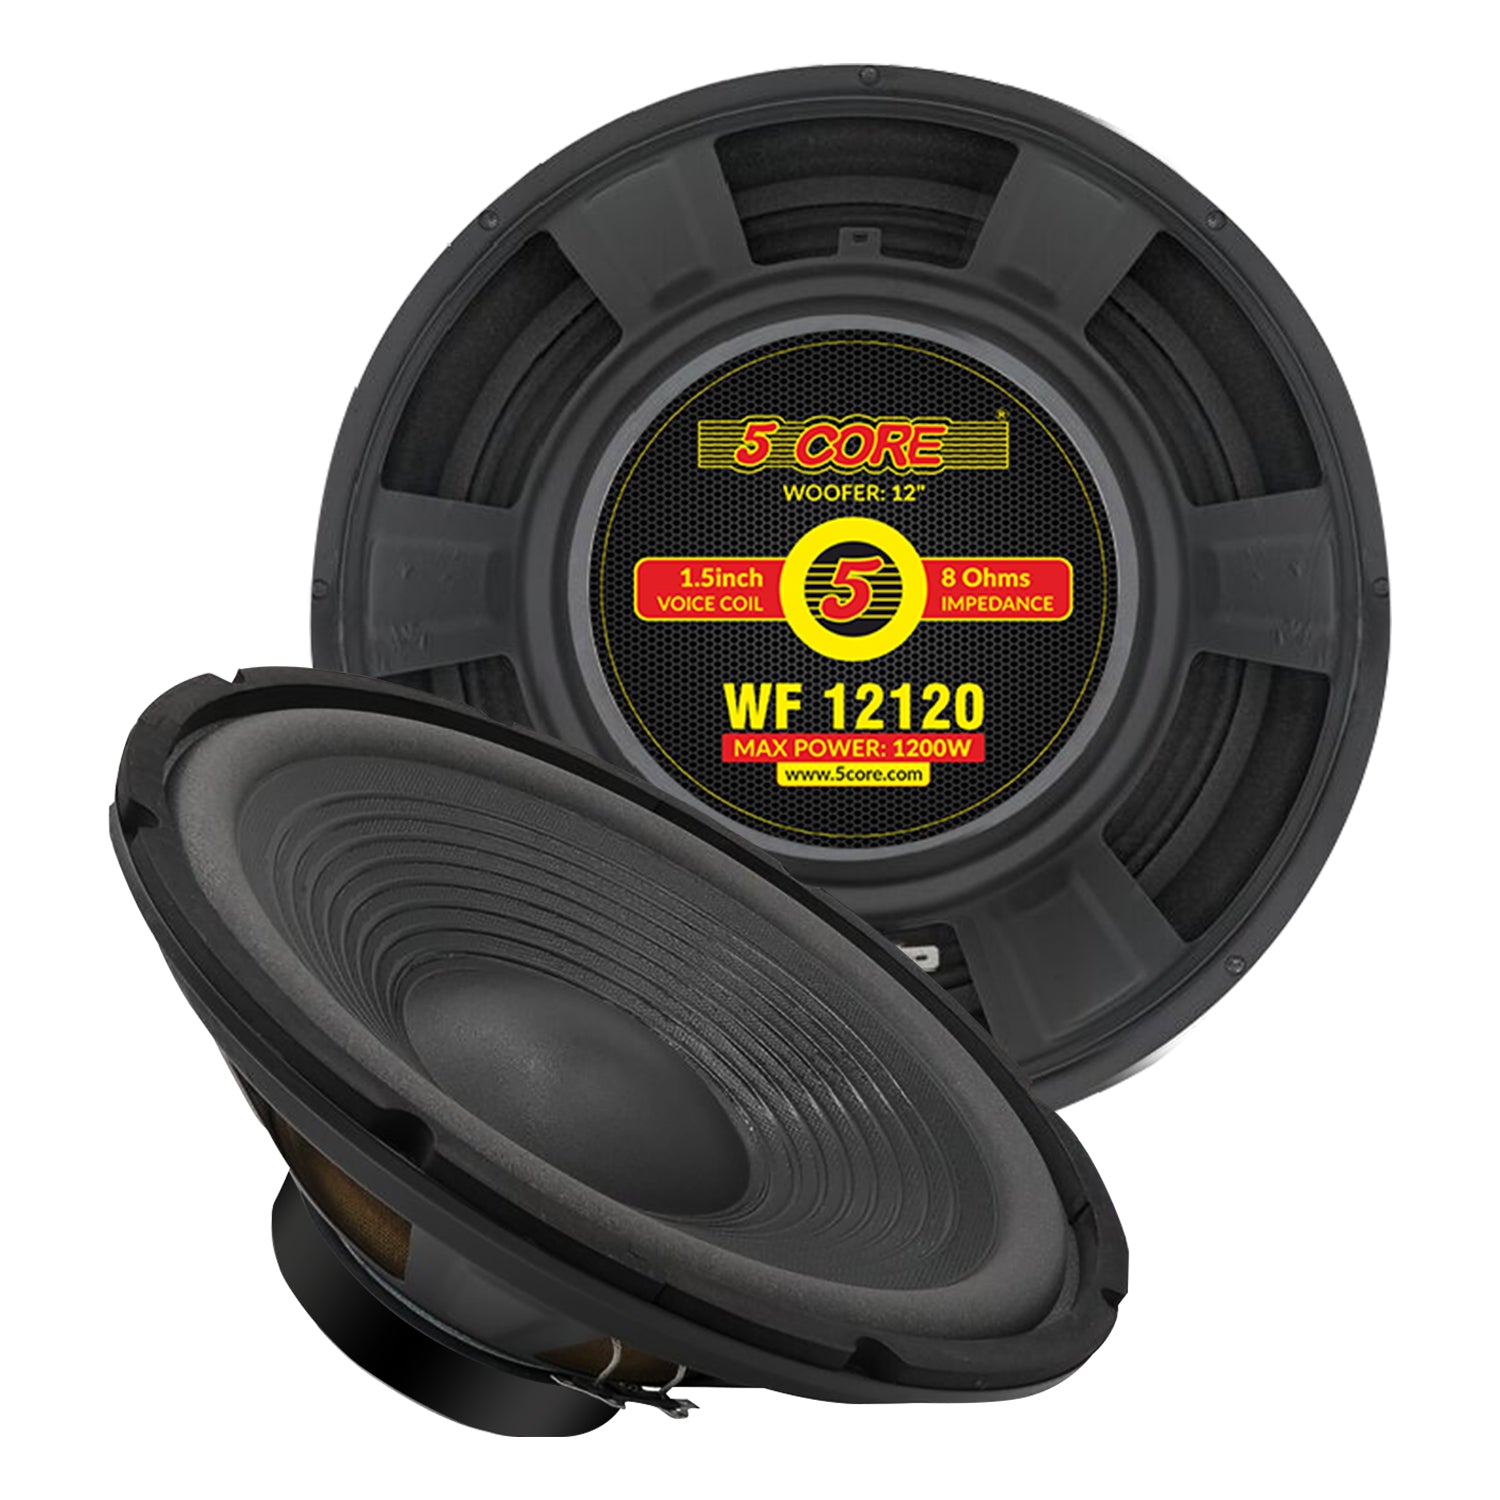 5 Core 12” Inch Replacement Speaker, Premium Woofer 120W Max Power 8 Ohm - WF 12120